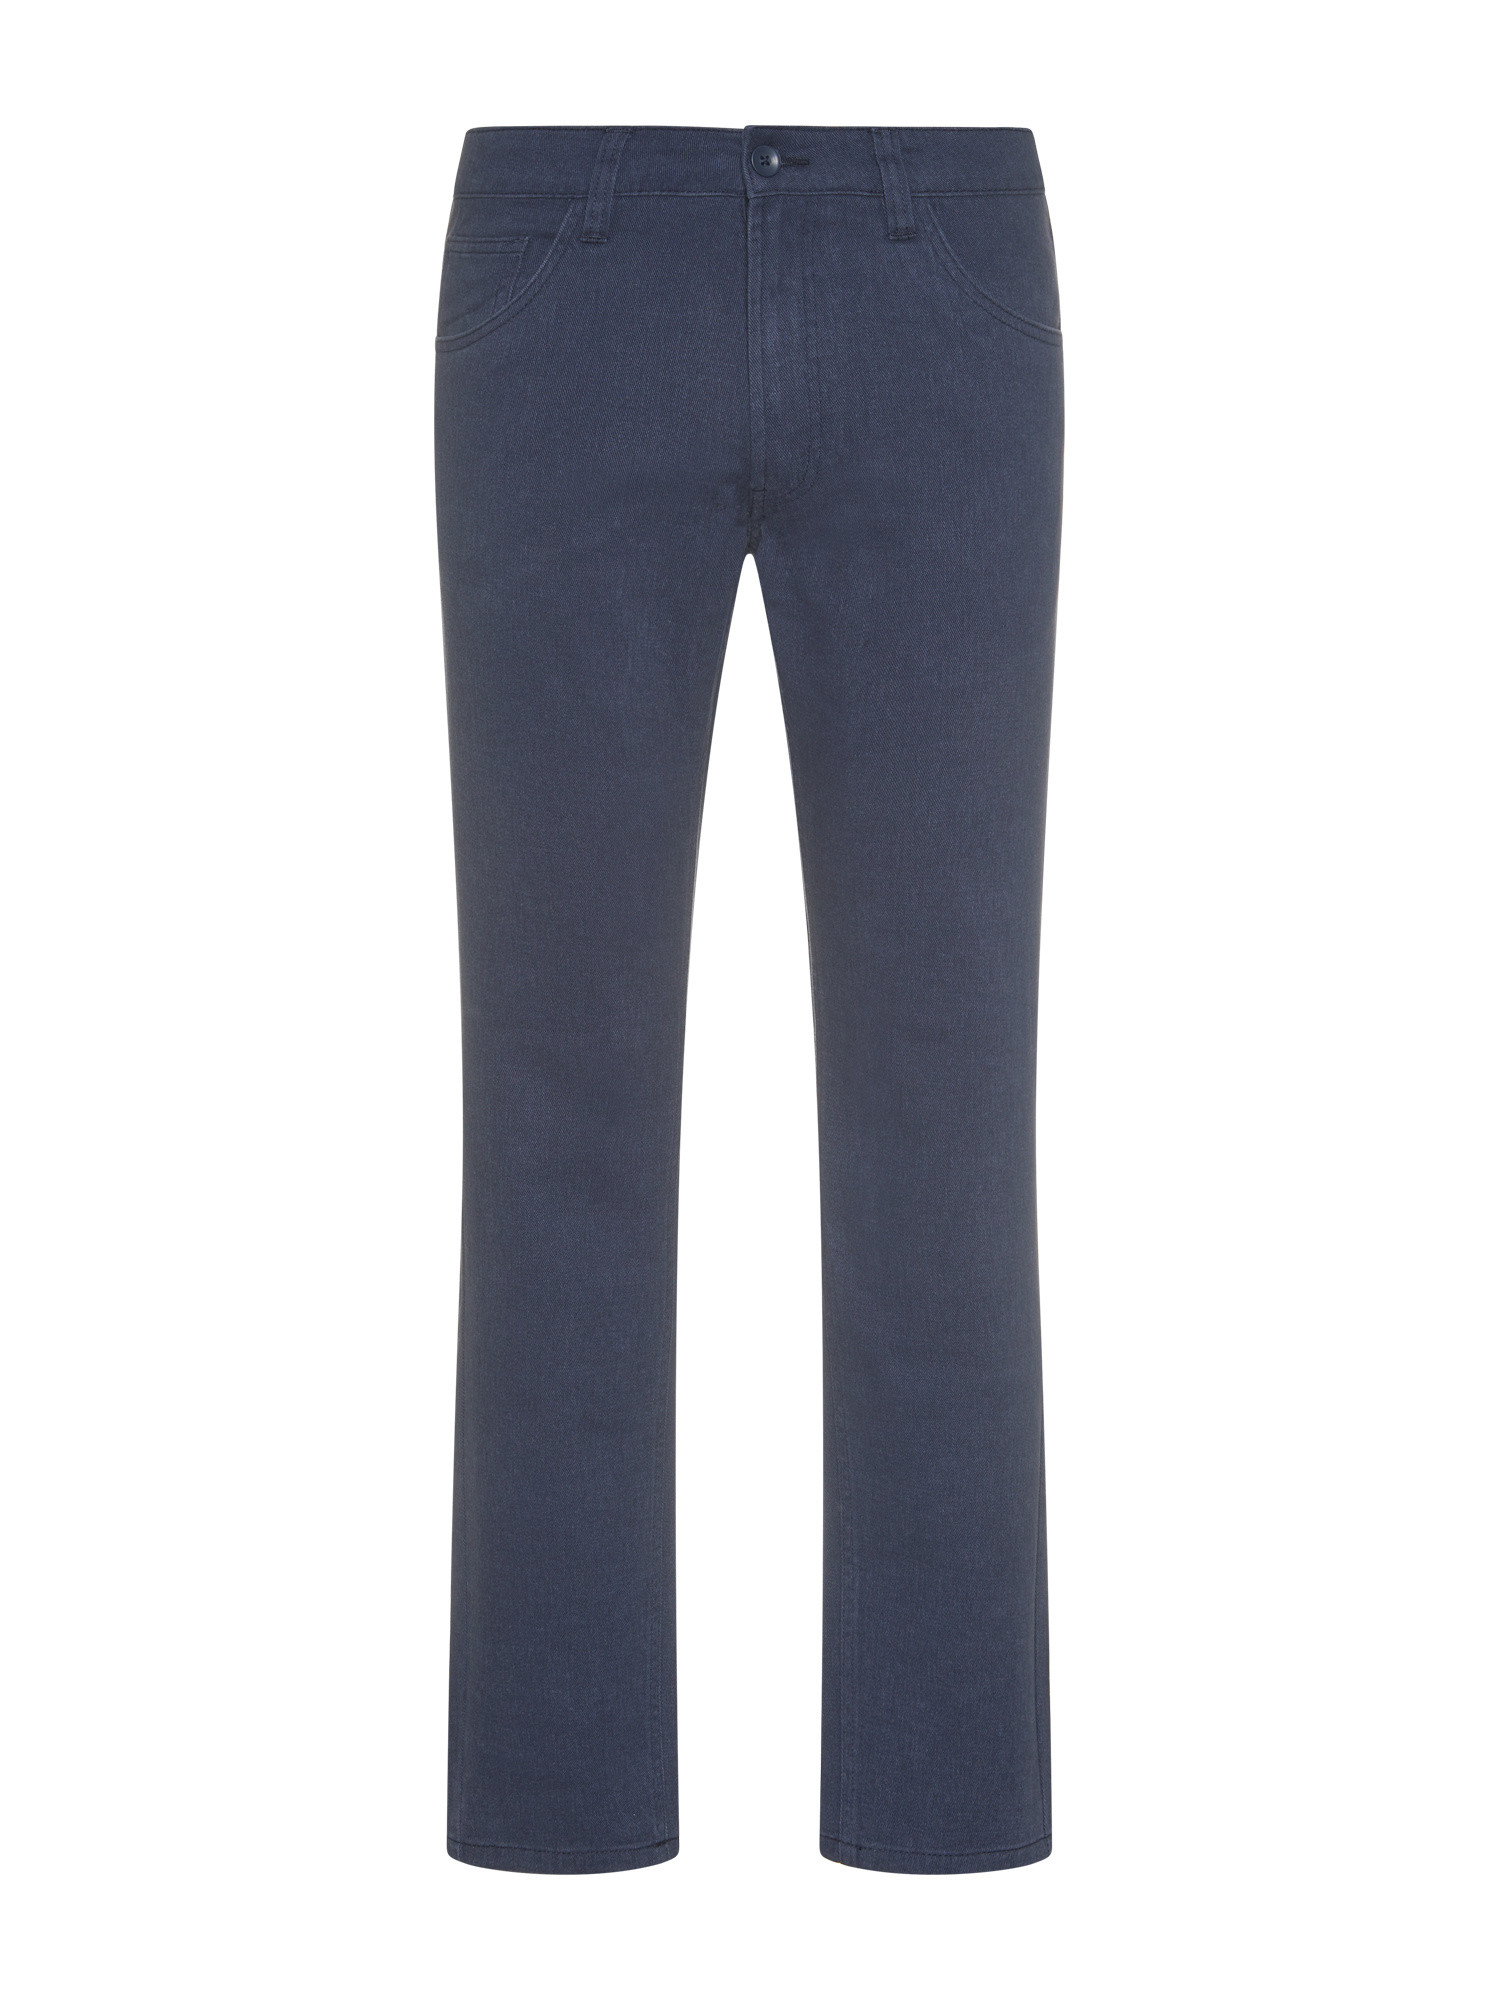 JCT - Pantaloni regular fit cinque tasche in puro cotone, Blu scuro, large image number 0